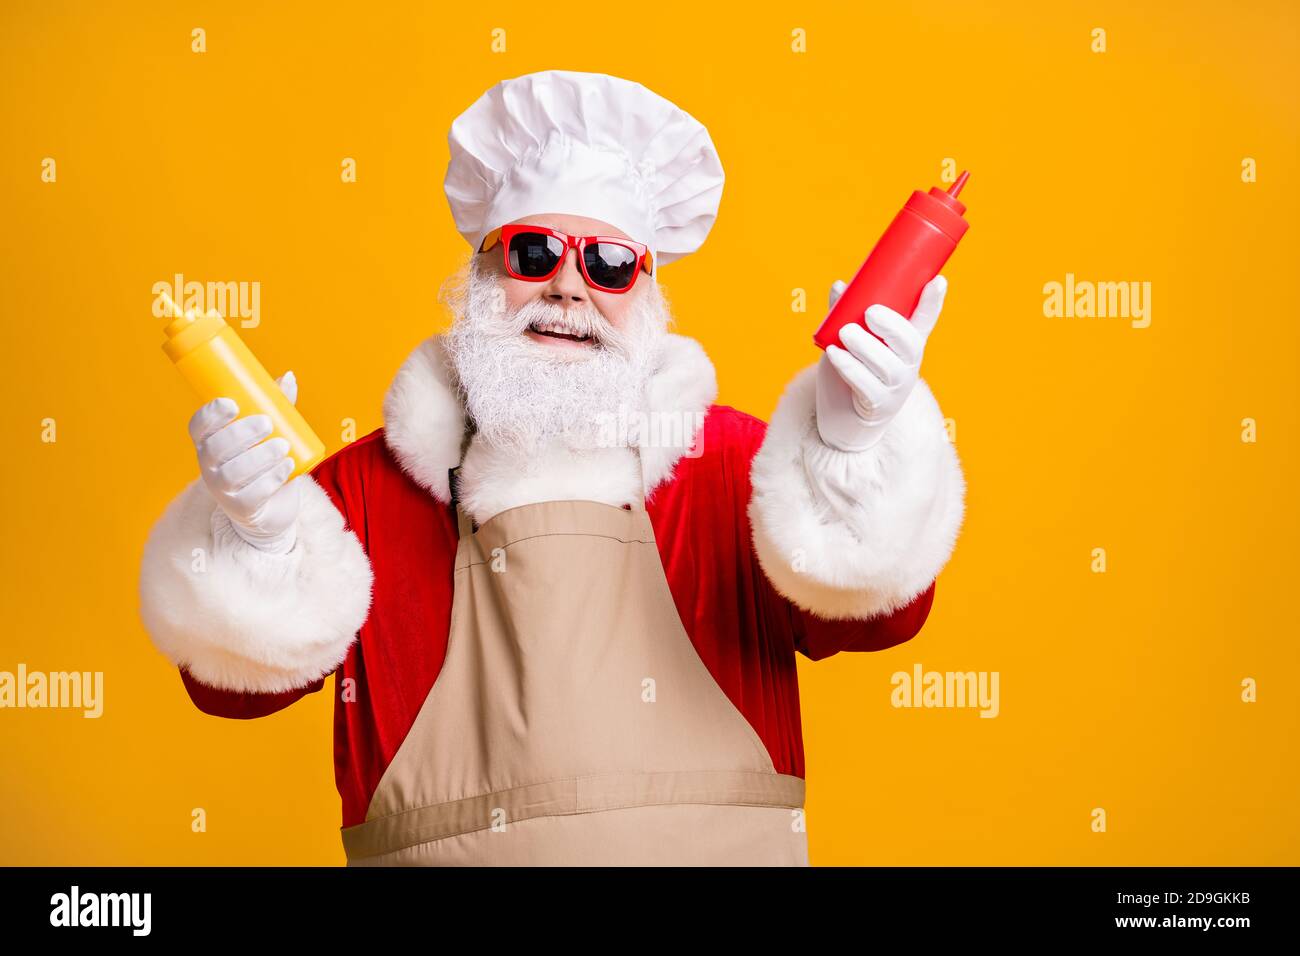 Funny santa claus in chef headwear cook x-mas christmas feast hold mustard tomato sauce bottle wear sunglass apron sunglass isolated bright shine Stock Photo